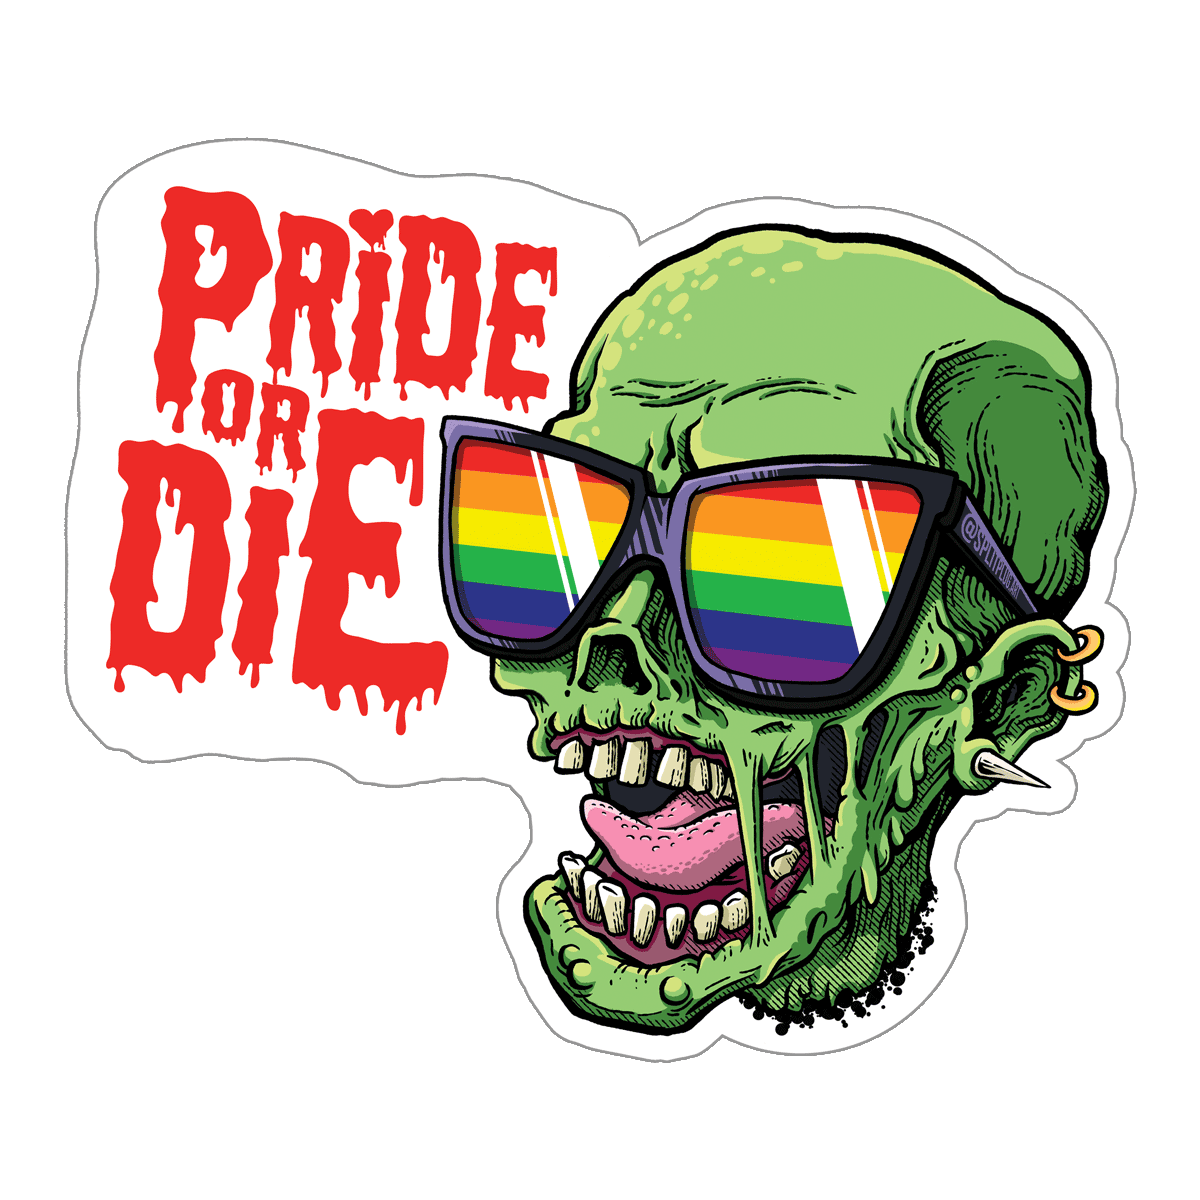 LGBTQIA+ Pride or Die Zombie Sticker